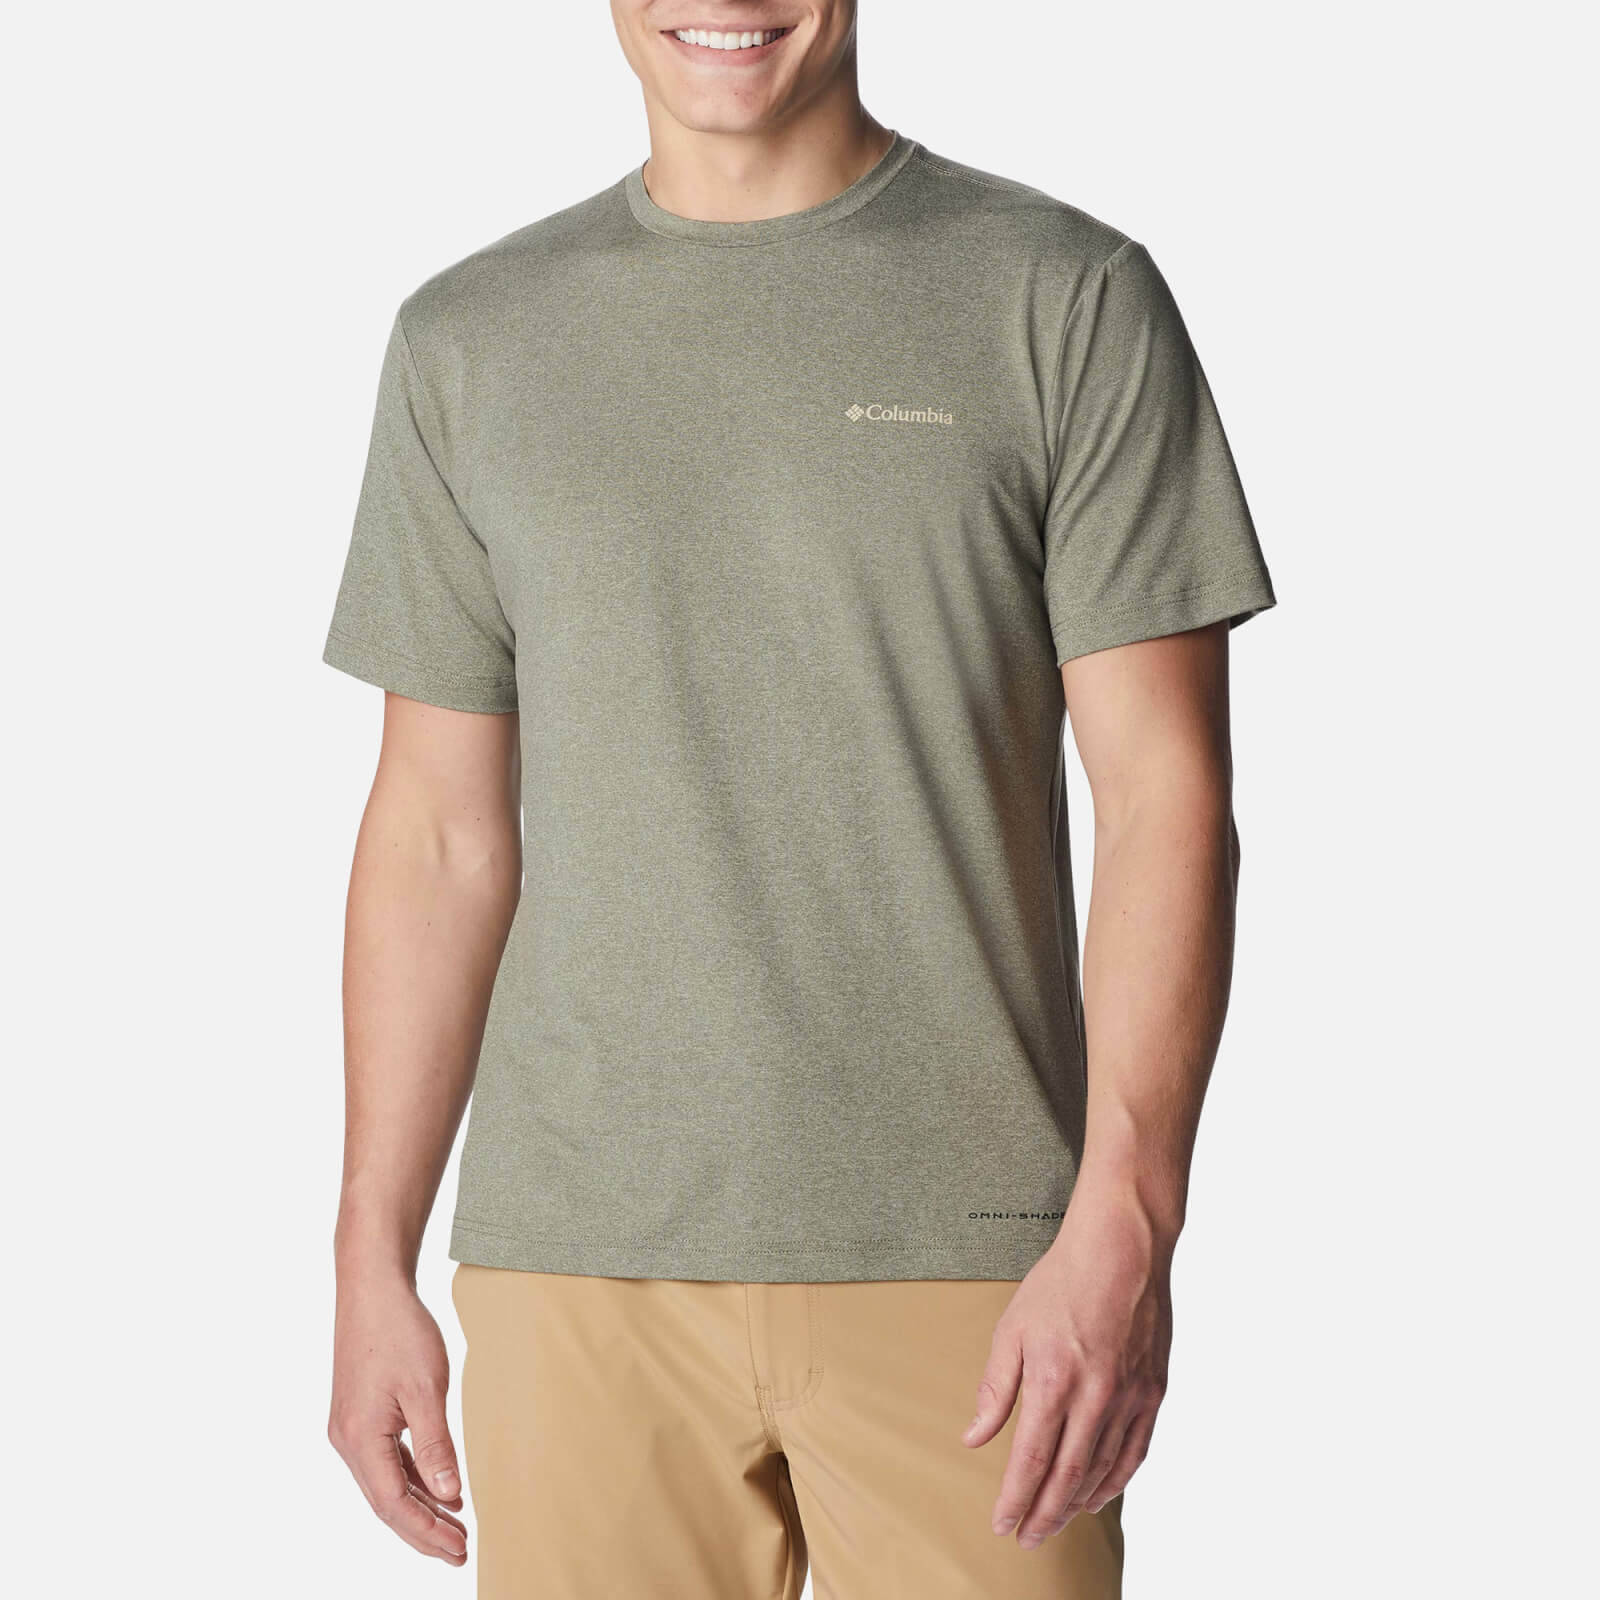 Columbia Tech Trailtm Graphic Jersey T-Shirt